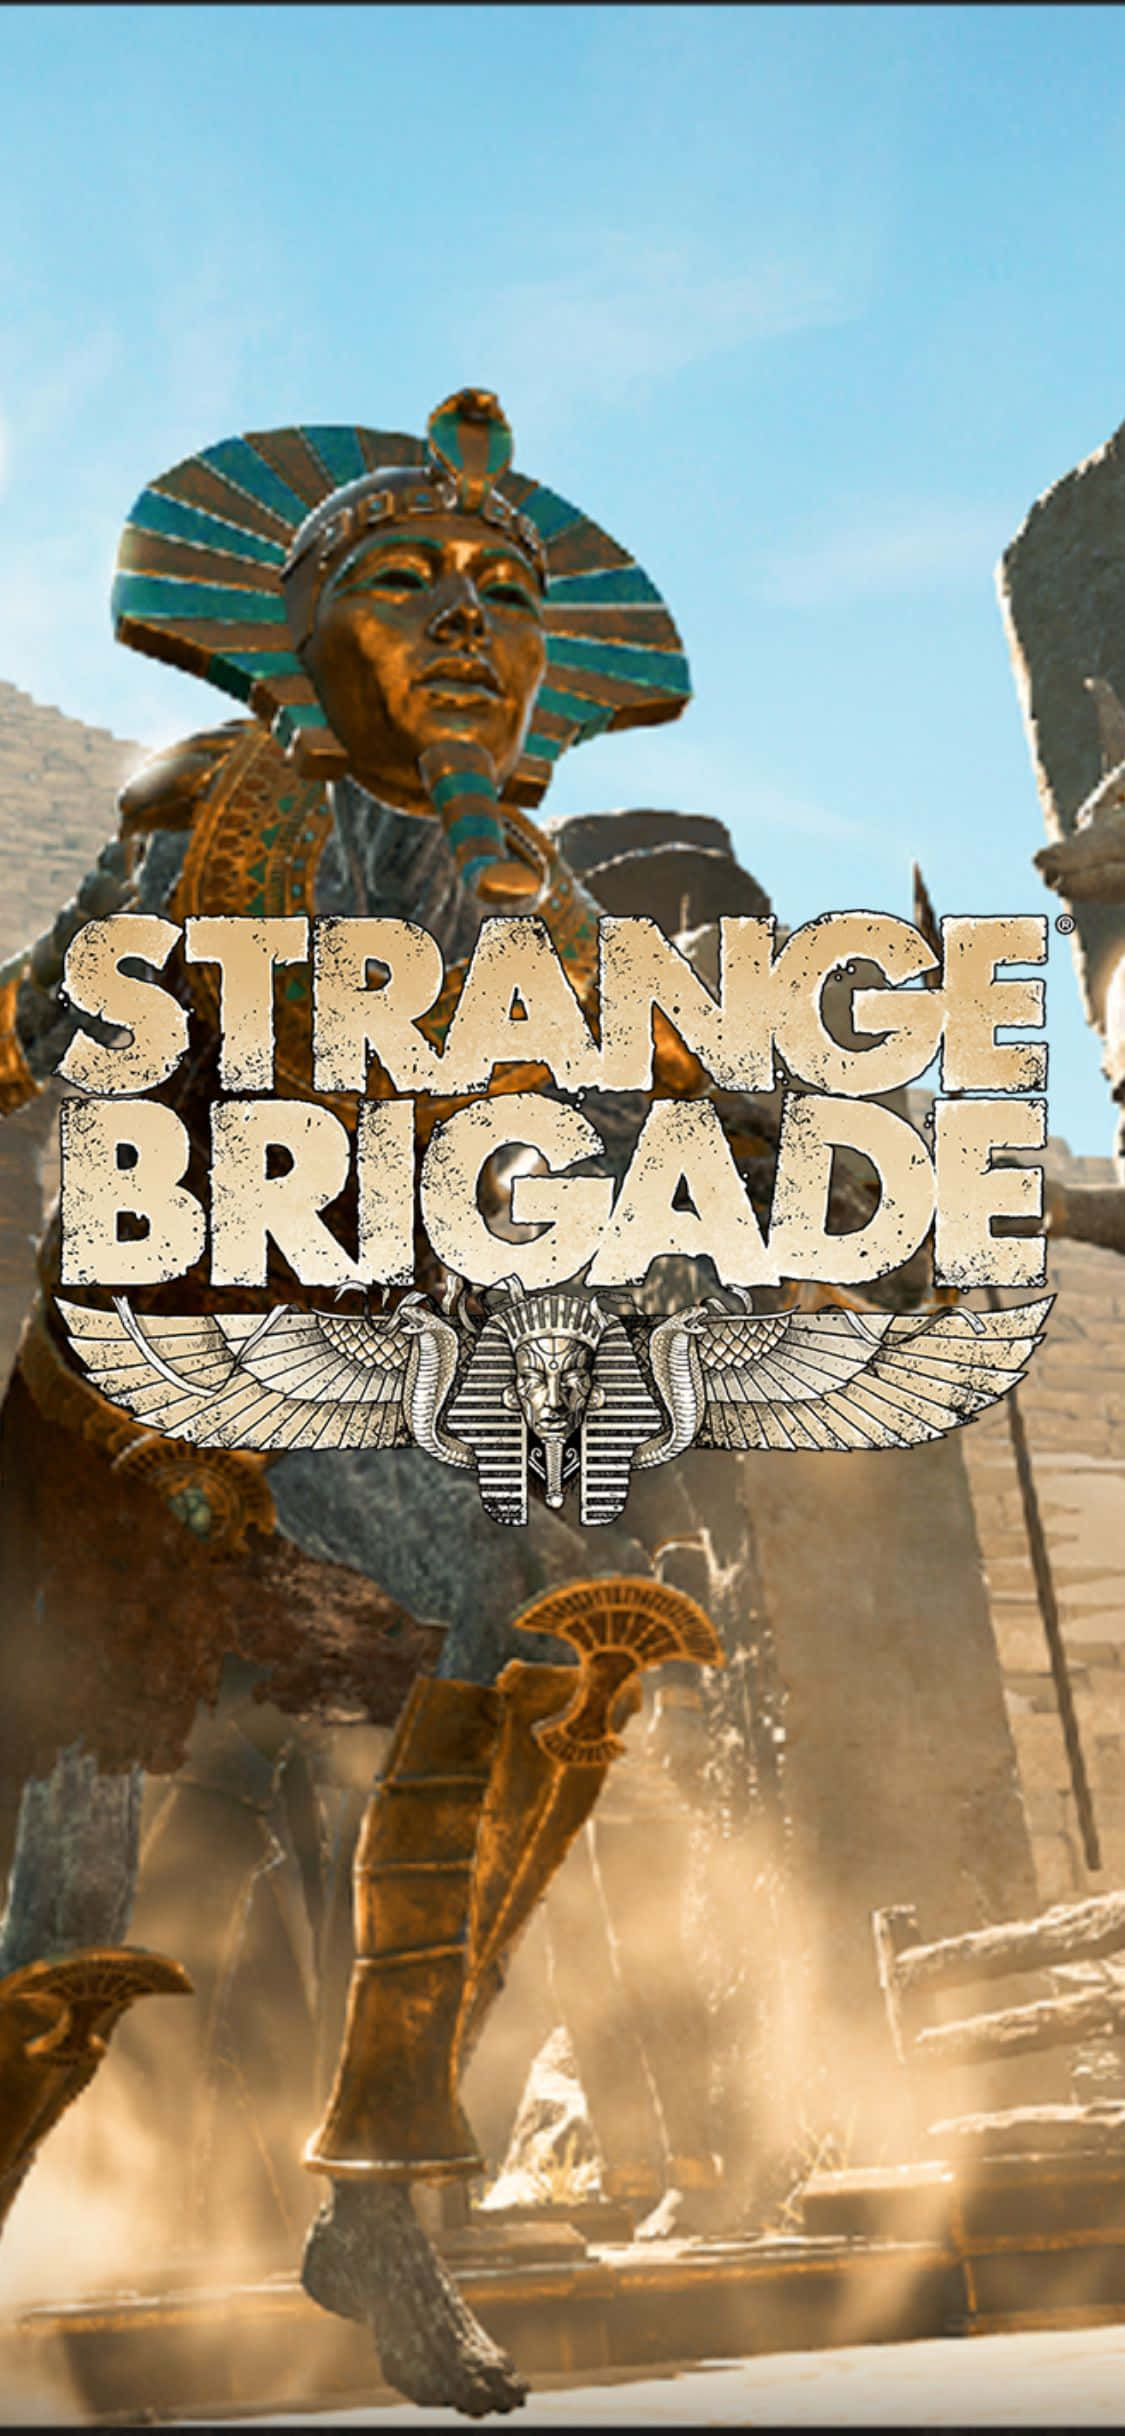 Pharaoh Great Pyramid Of Bes Iphone X Strange Brigade Background